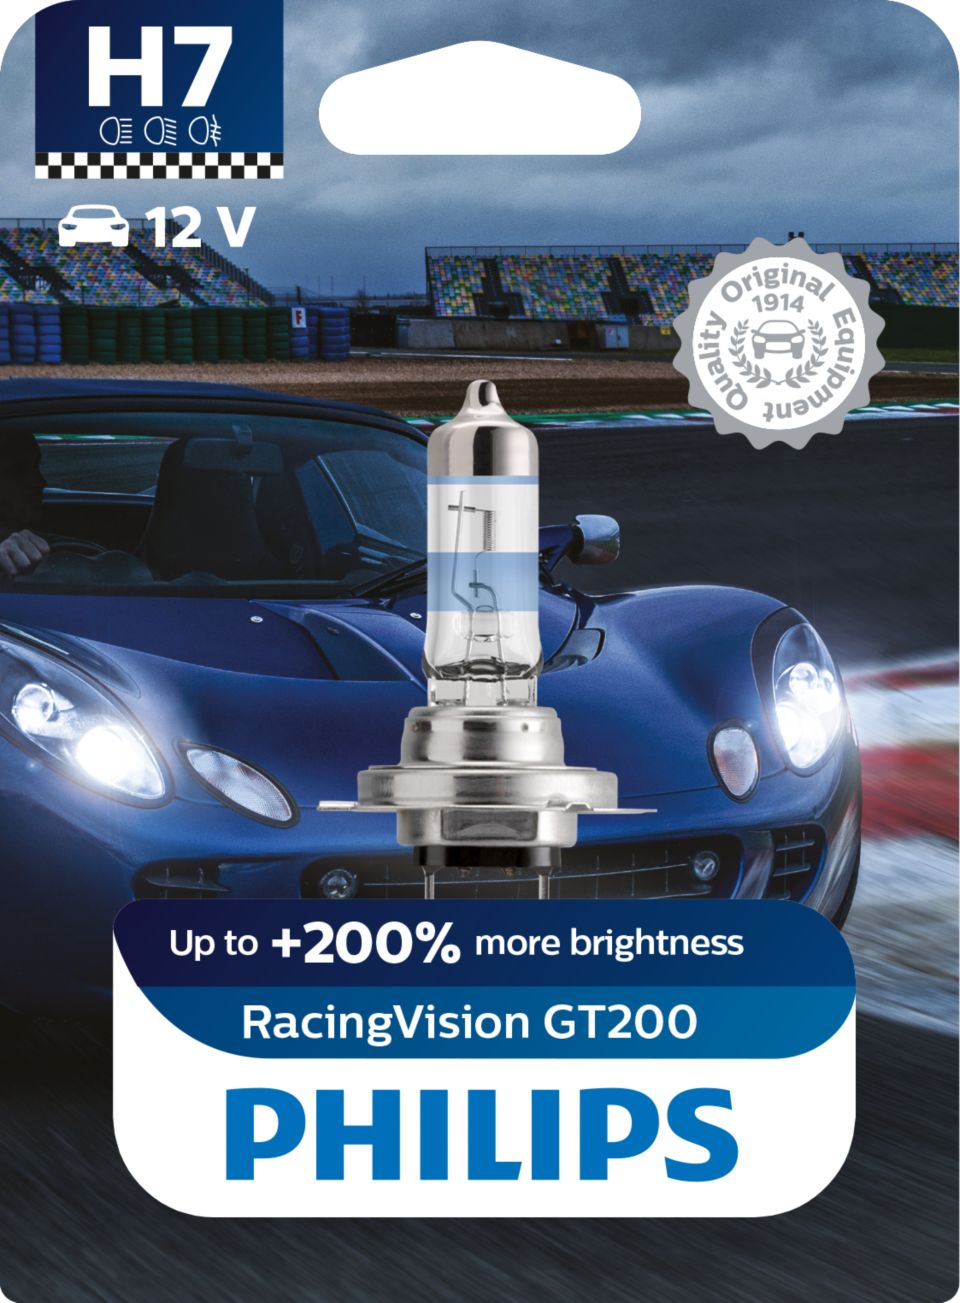 philips racingvision gt200 h7 vs led Txvso8 360° h7 